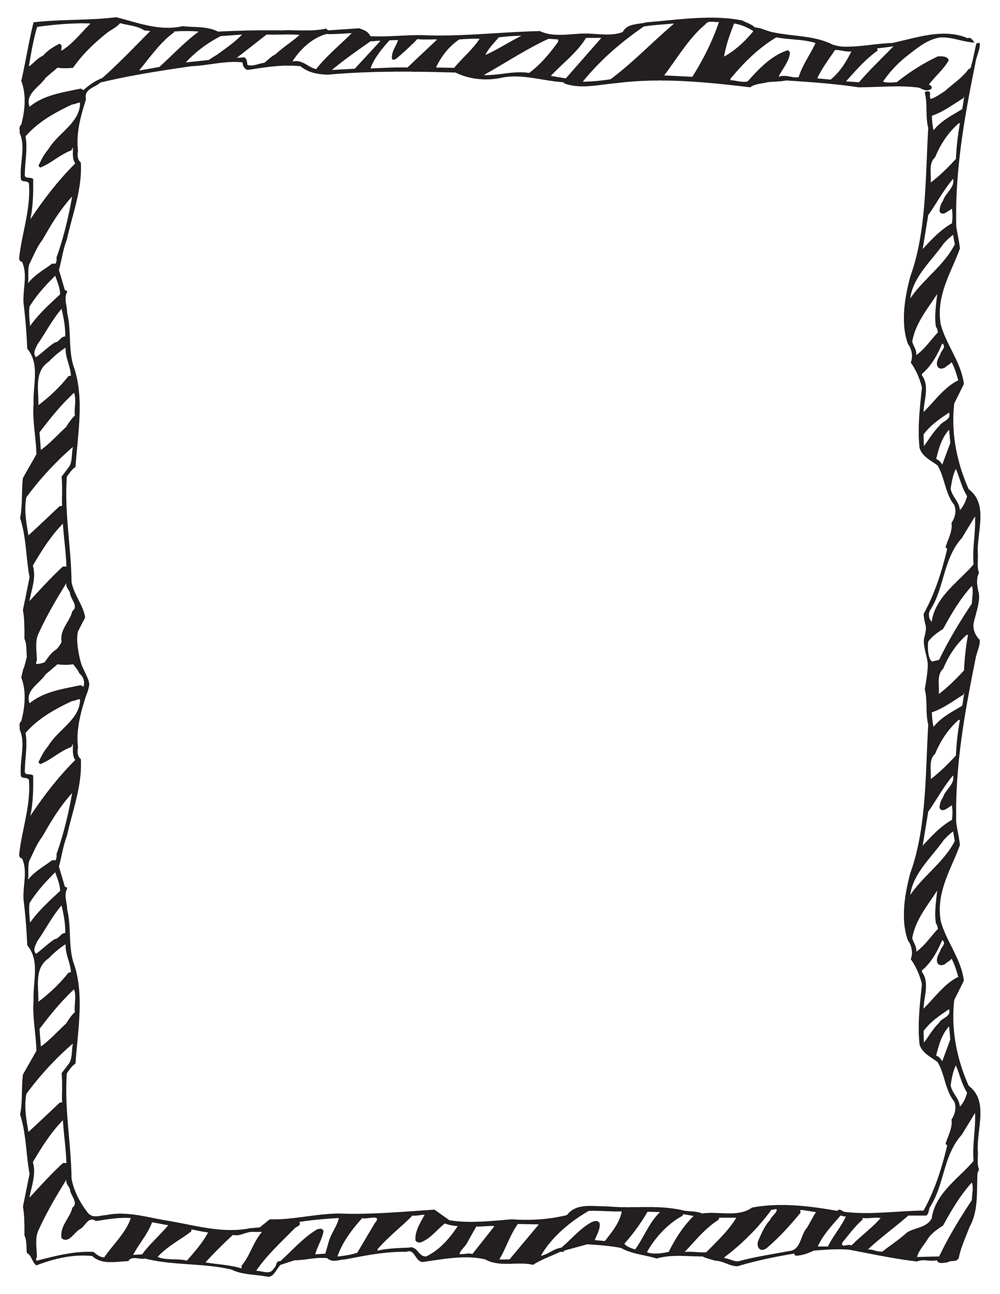 Displaying 15 Images For Anim - Zebra Border Clip Art